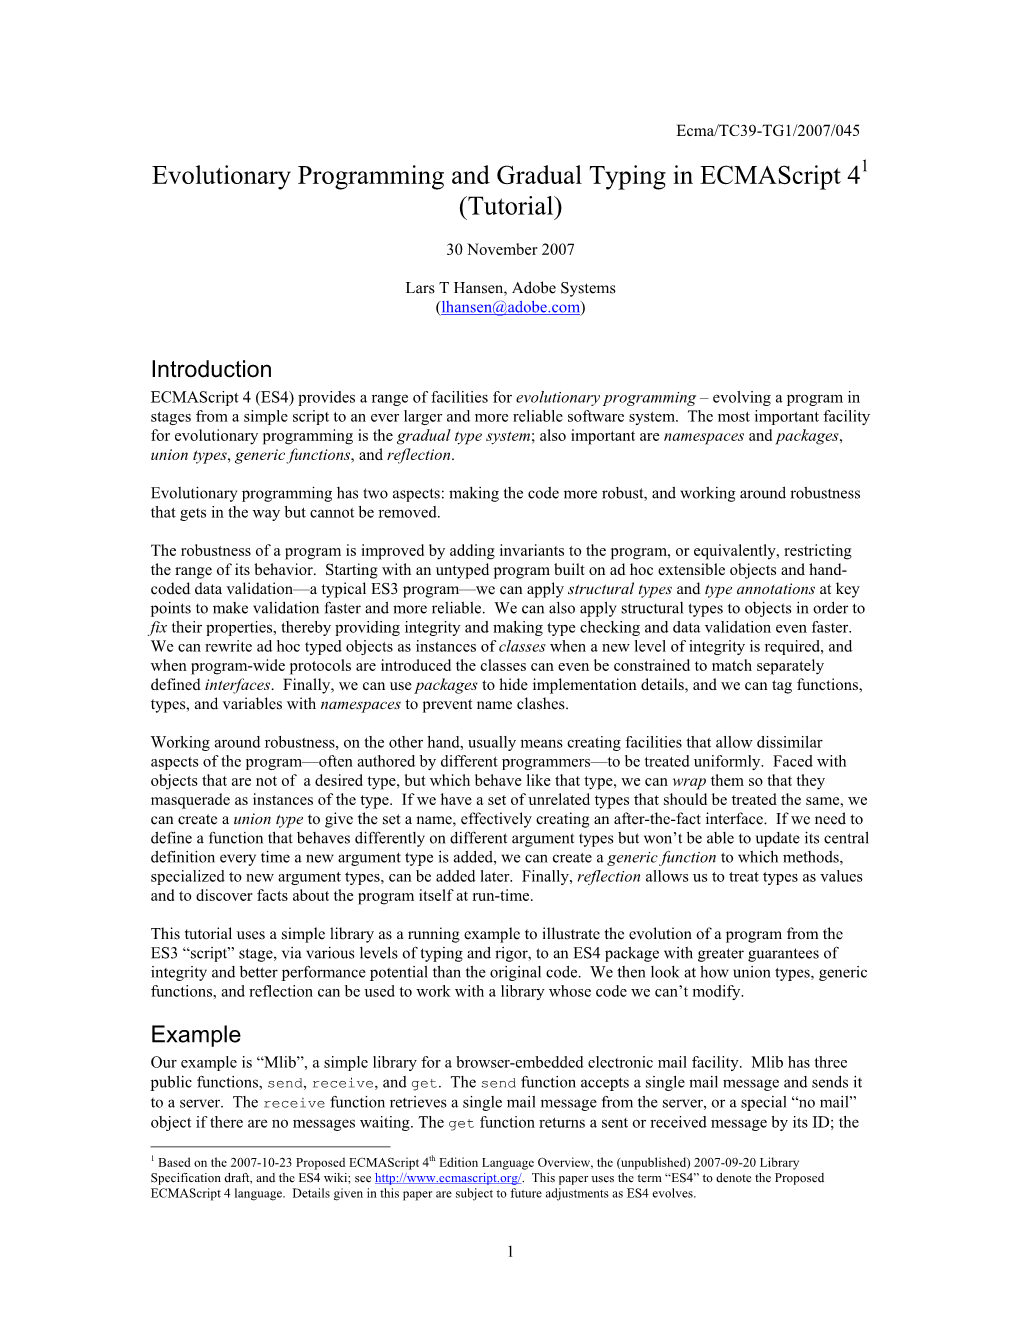 Evolutionary Programming and Gradual Typing in Ecmascript 41 (Tutorial)